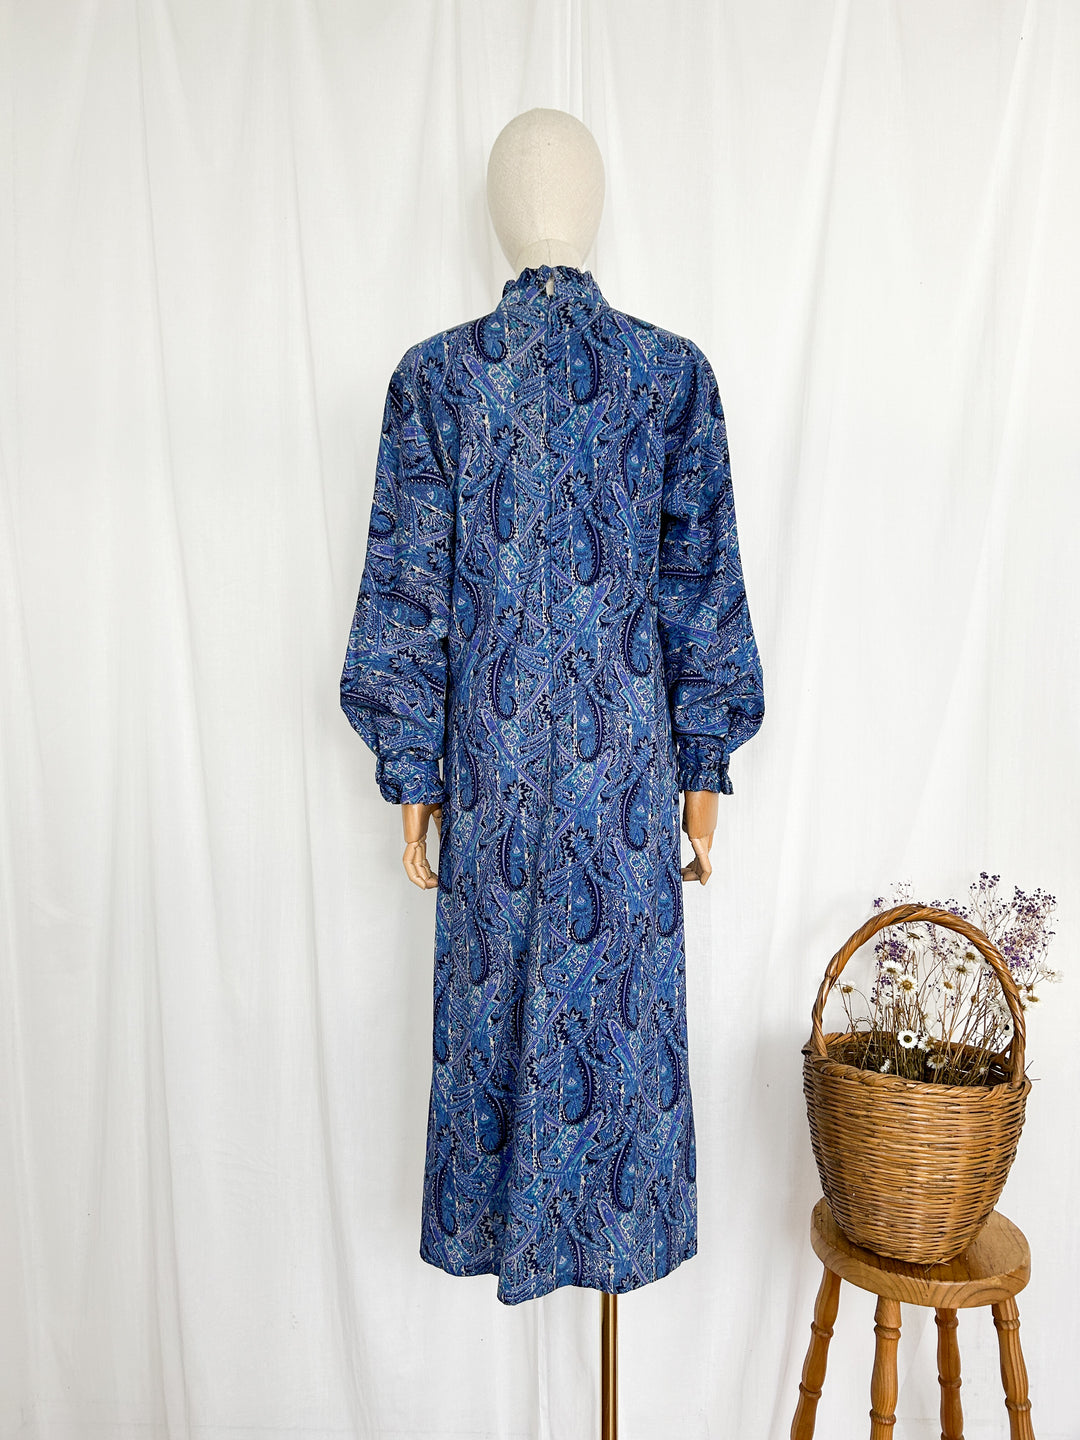 The Varuna ~ BEAUTIFUL 1970S HANDMADE LIBERTY WOOL DRESS